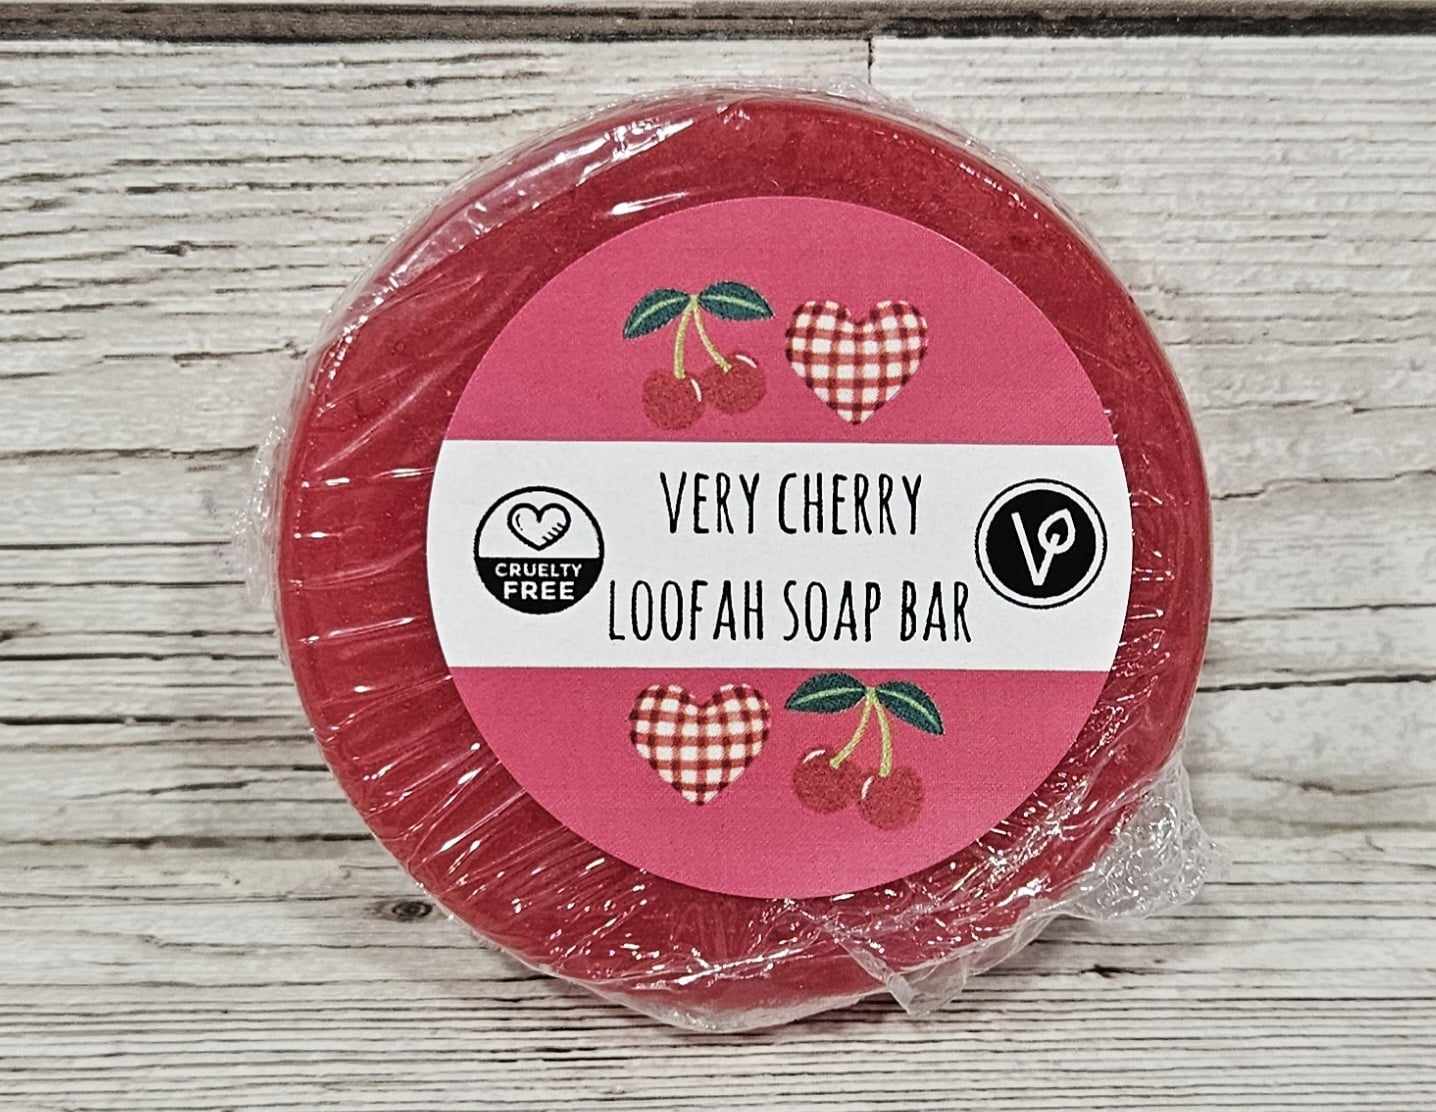 'Very cherry' Loofah Soap Bar